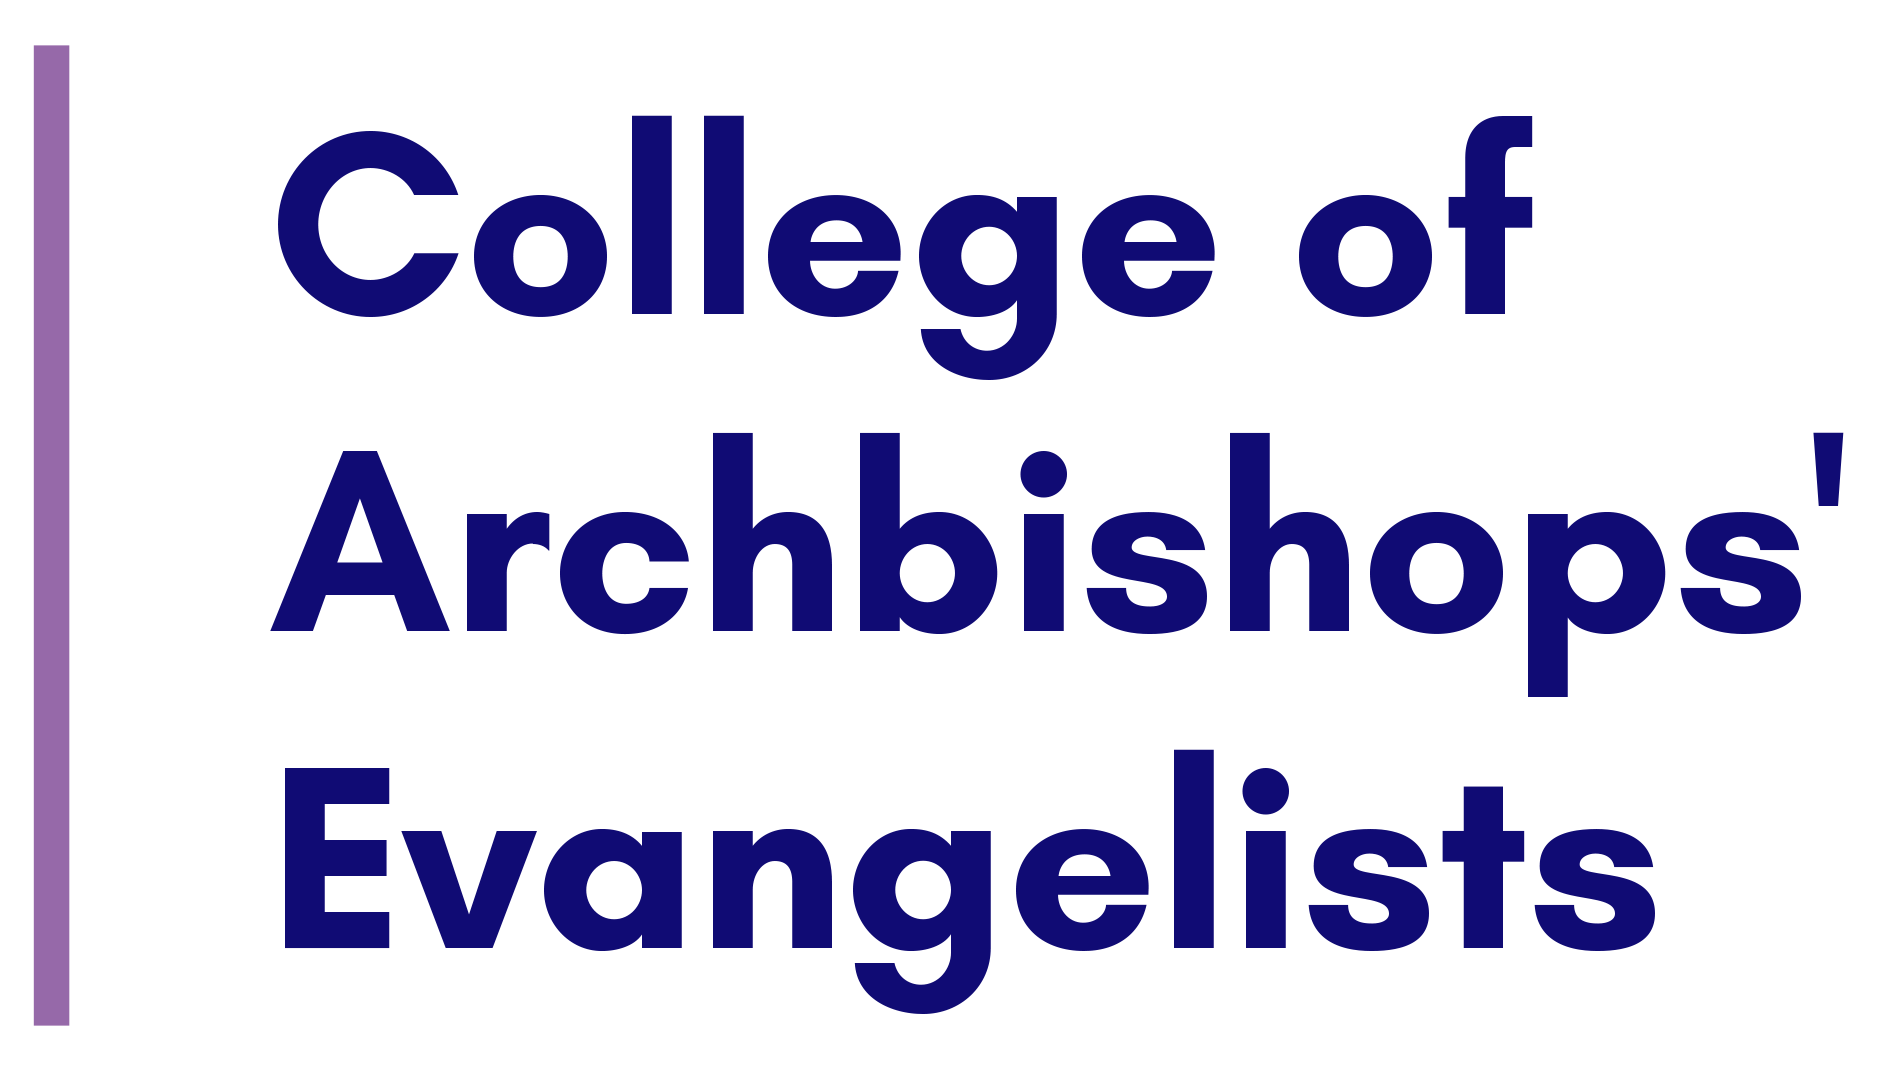 The College of Archbishops' Evangelists